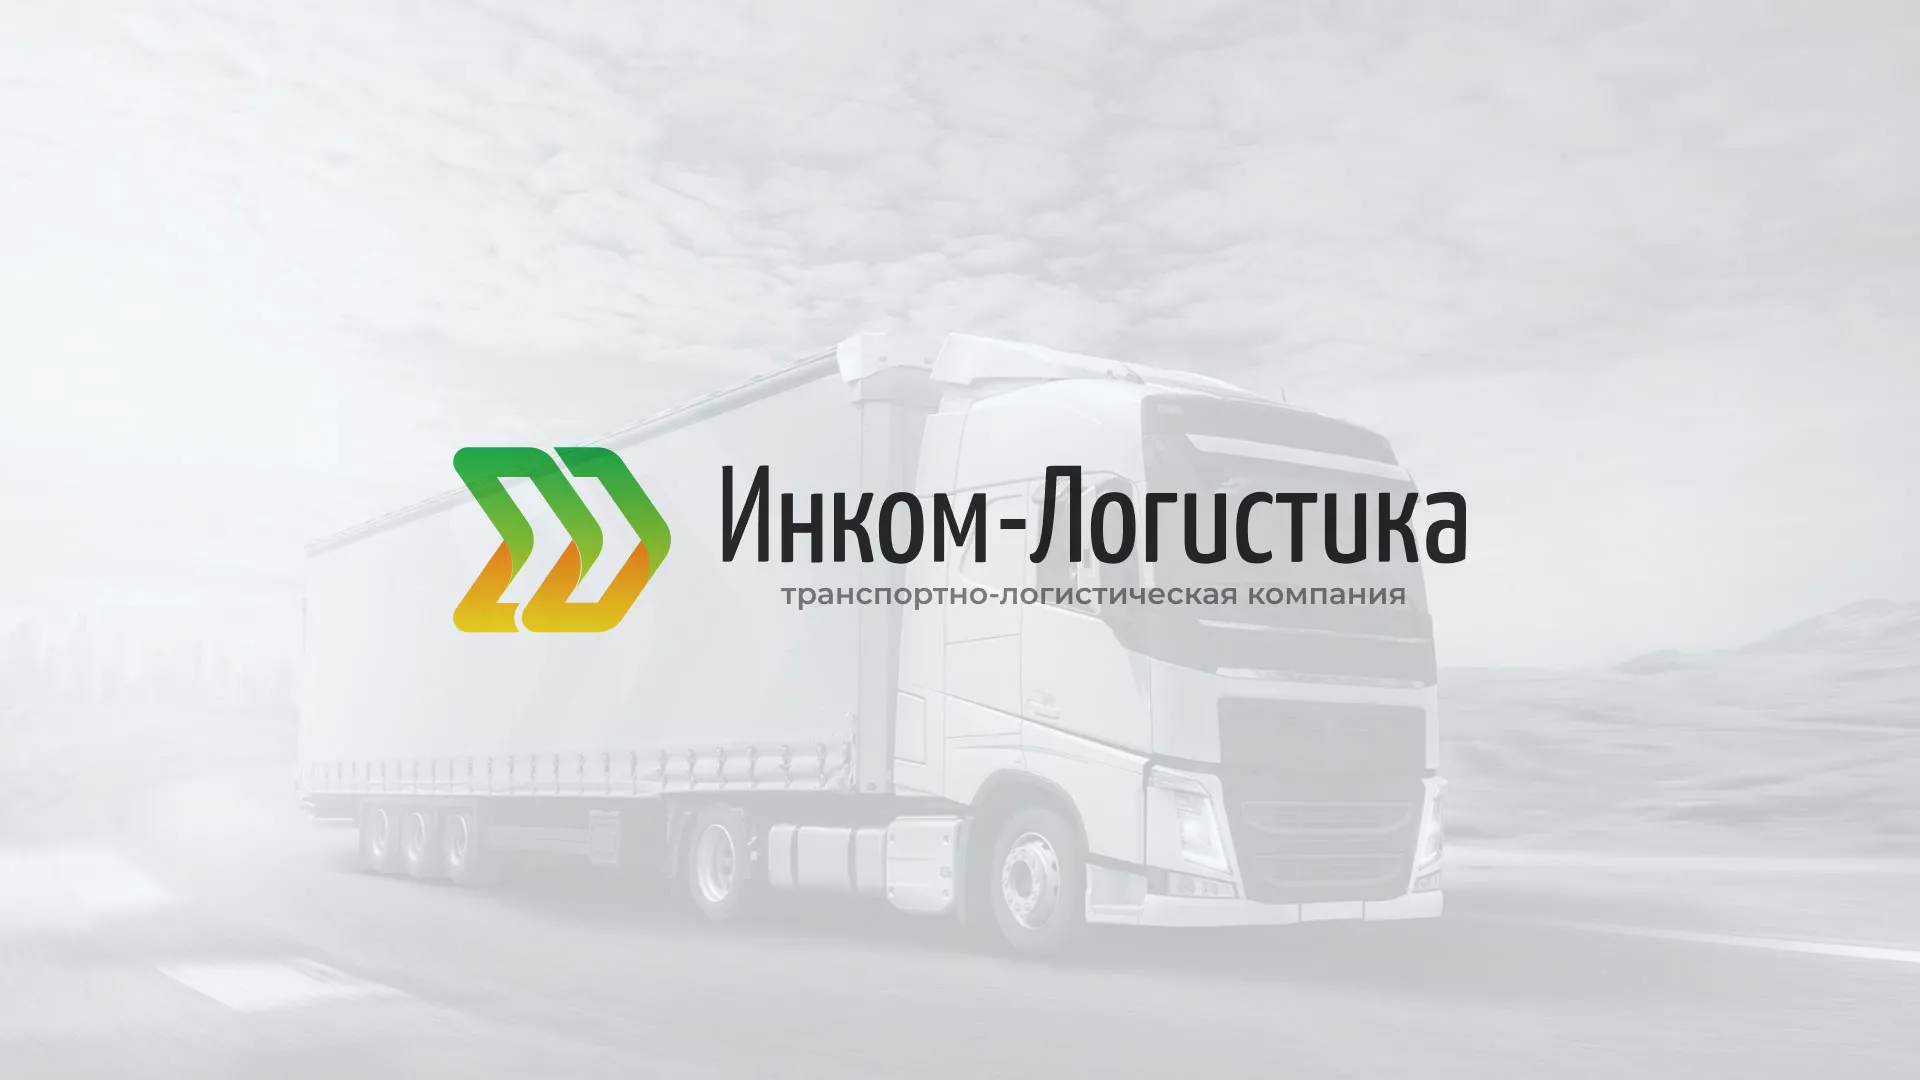 Разработка логотипа и сайта компании «Инком-Логистика» в Боброве